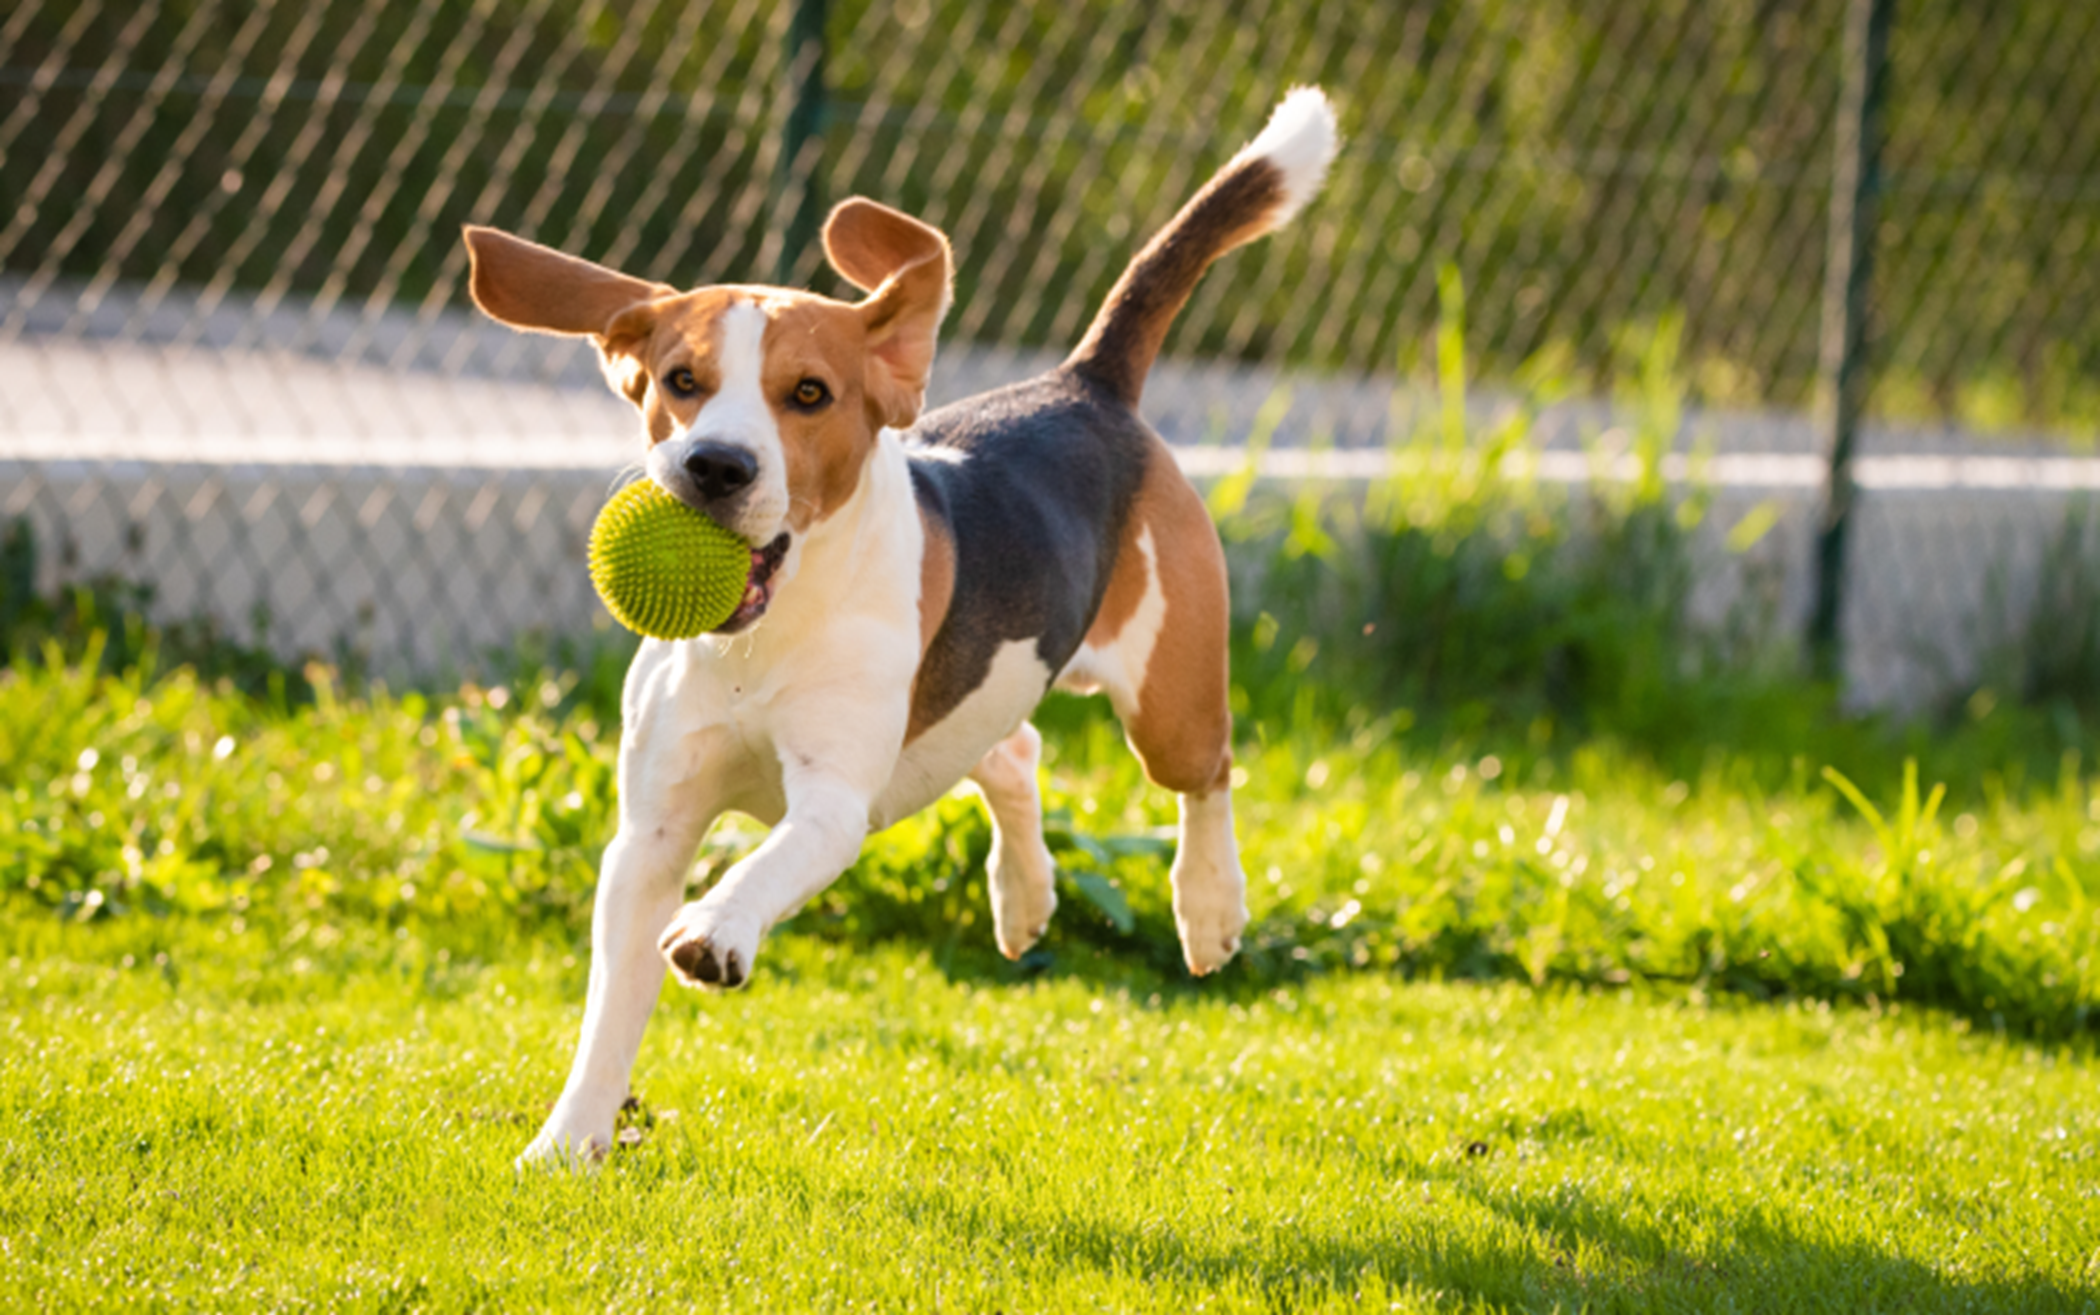 Beagle dog playing with ball